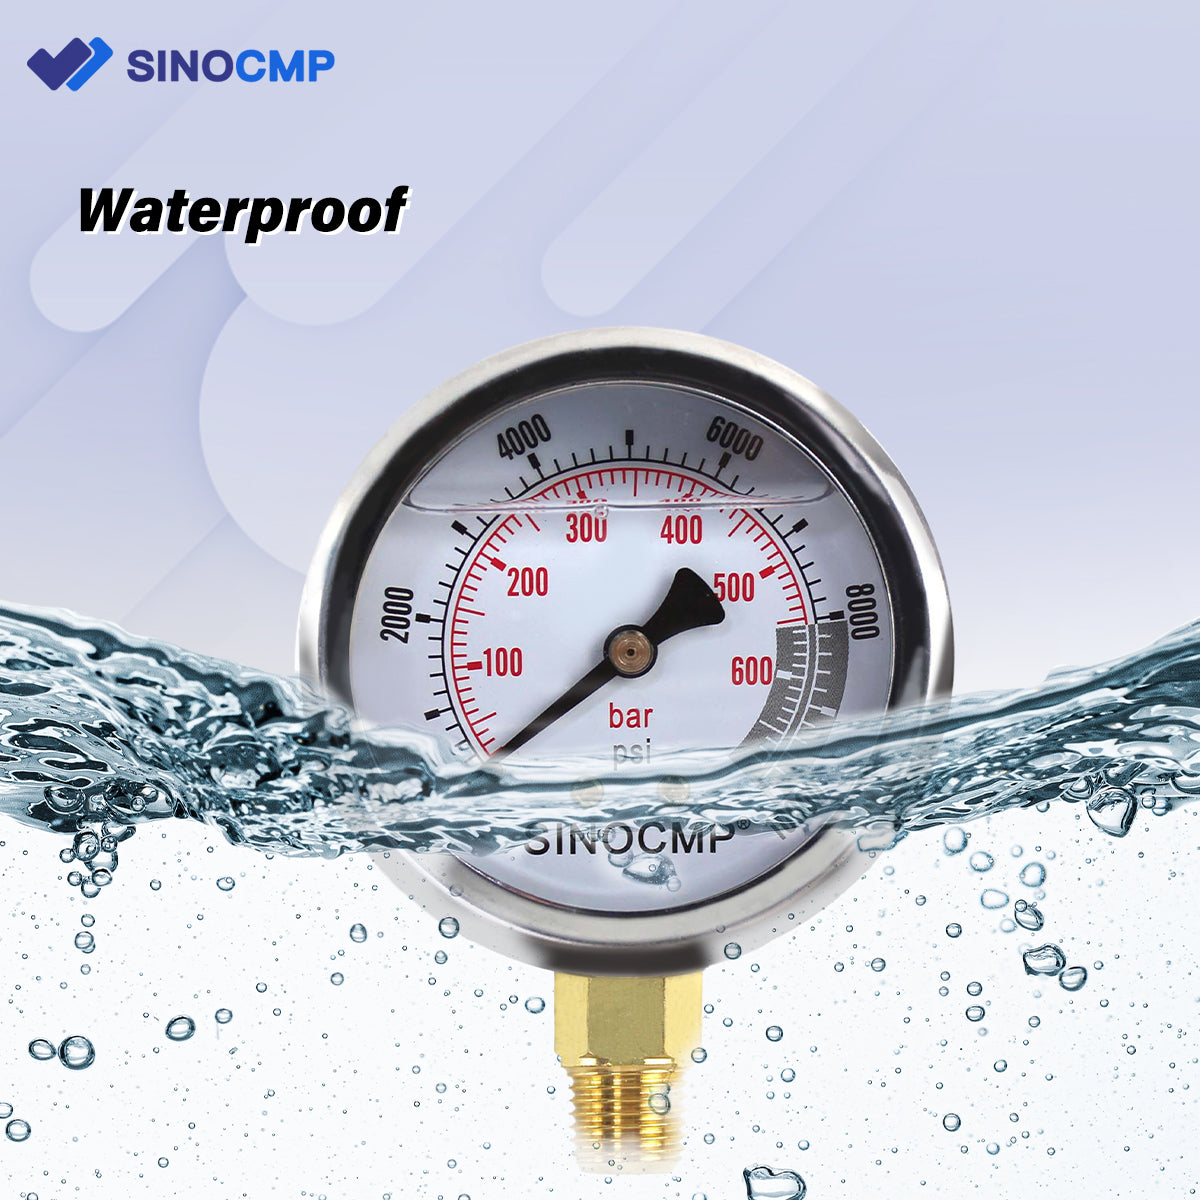 Waterproof - Sinocmp Hydraulic Pressure Test Kit                     